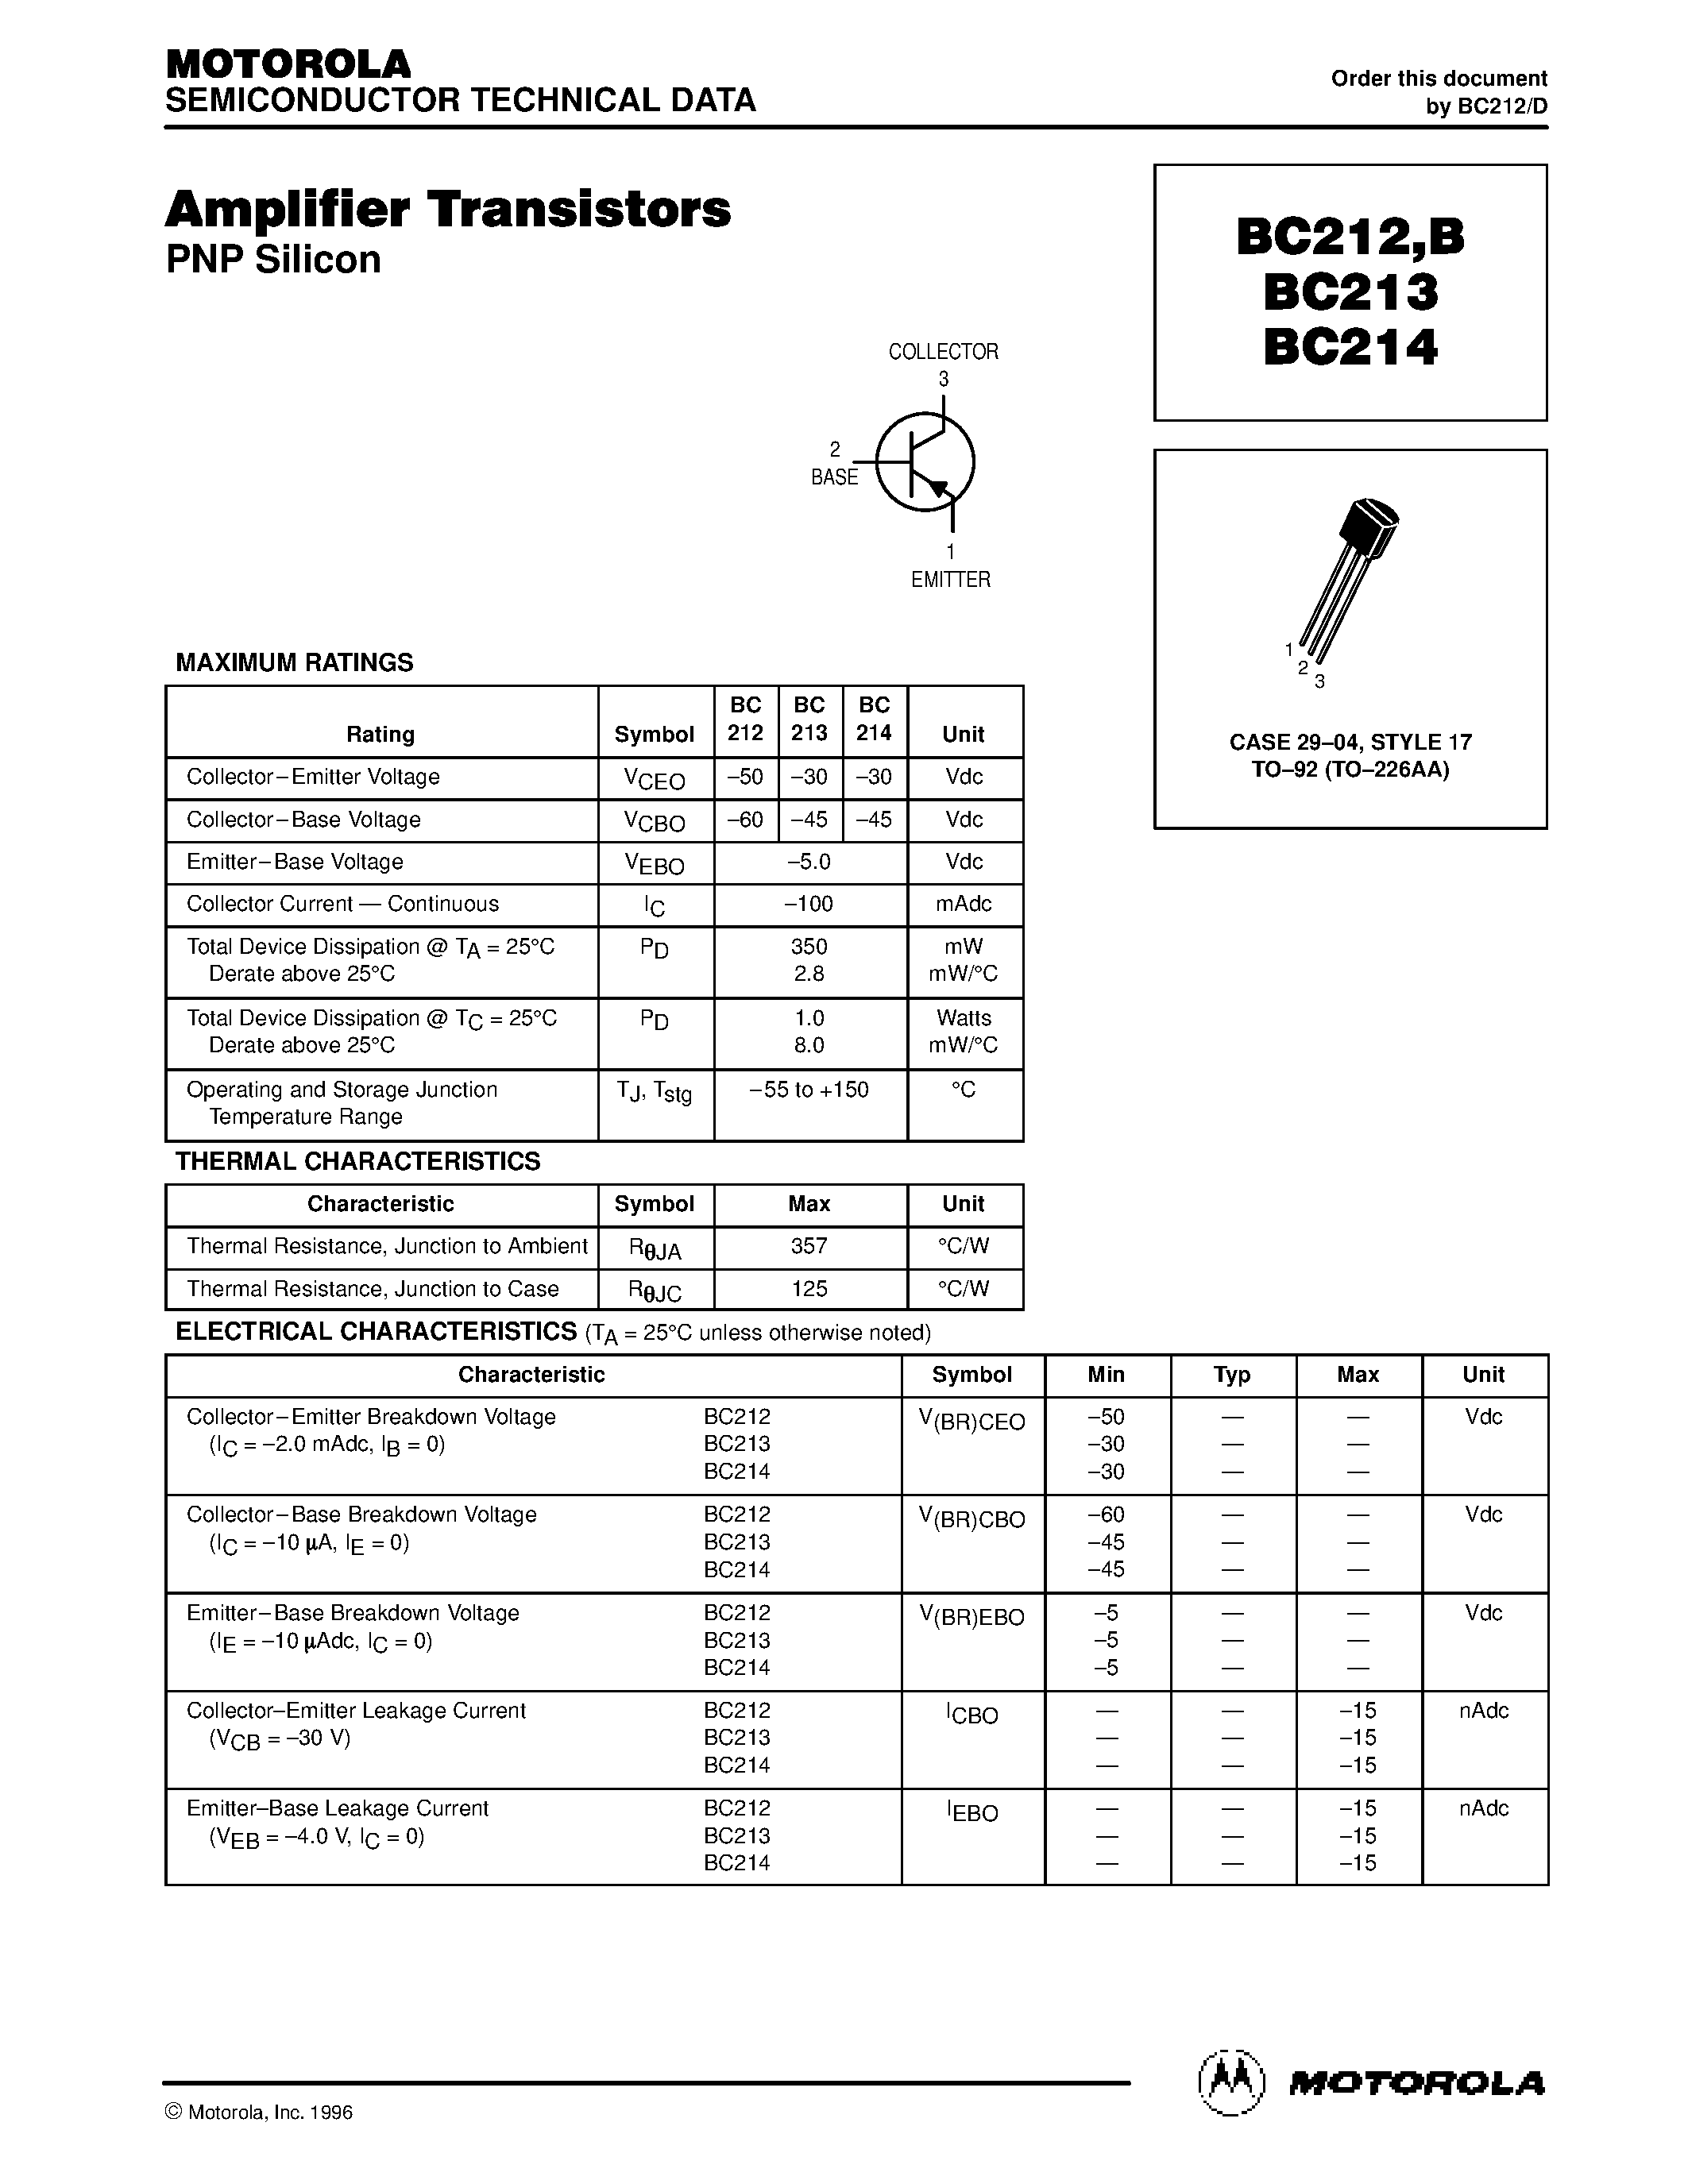 Datasheet BC214 - Amlifier Transistors (PNP) page 1